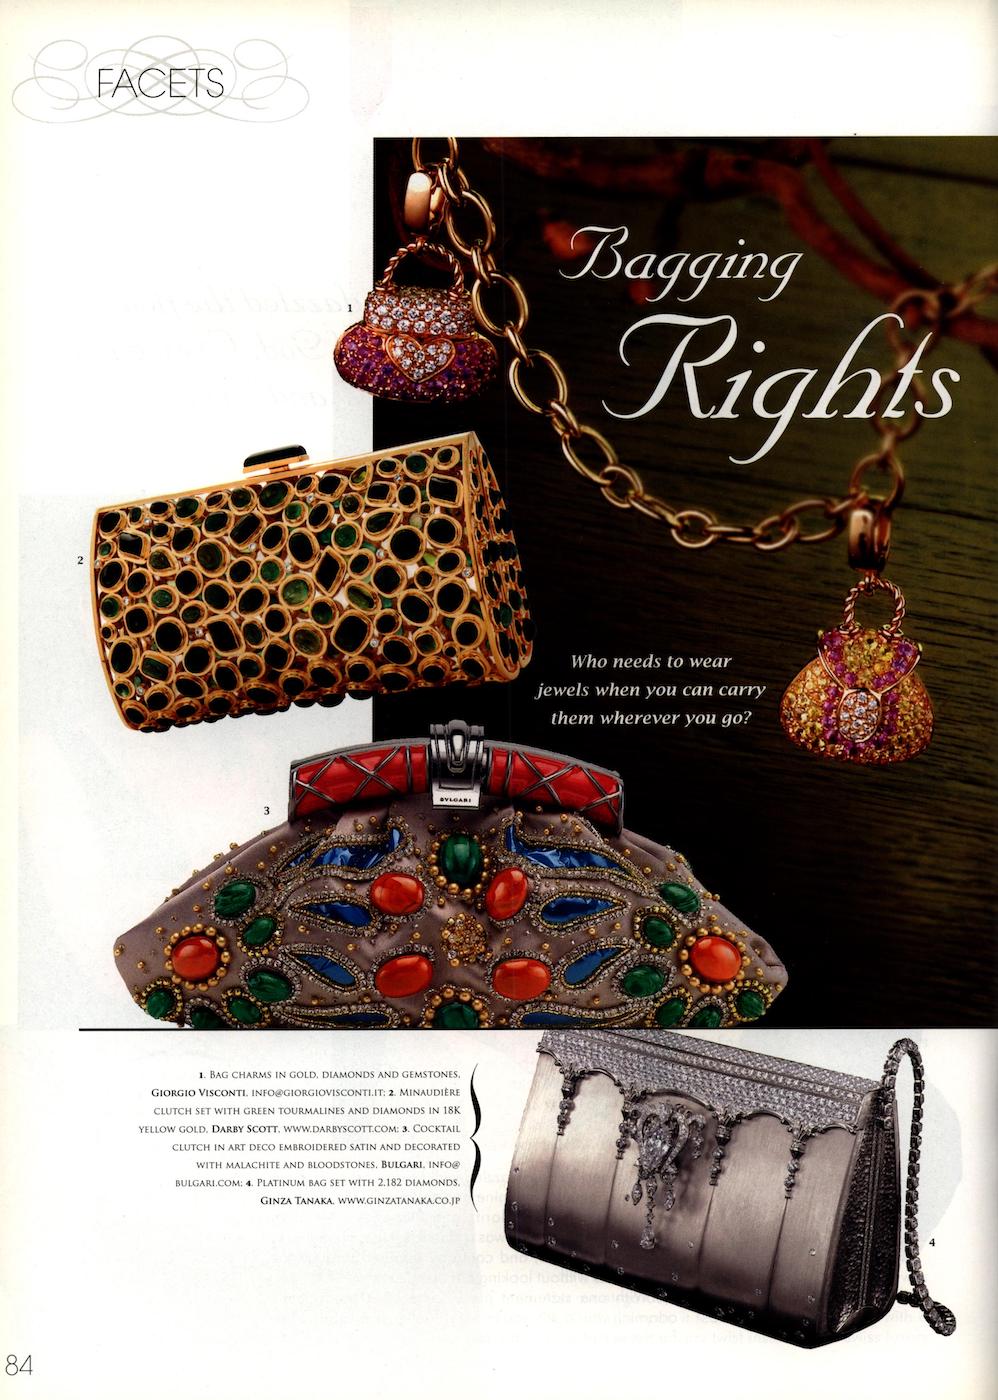 Tourmaline & Diamond Jeweled Minaudière from Darby Scott as seen in Solitaire Magazine